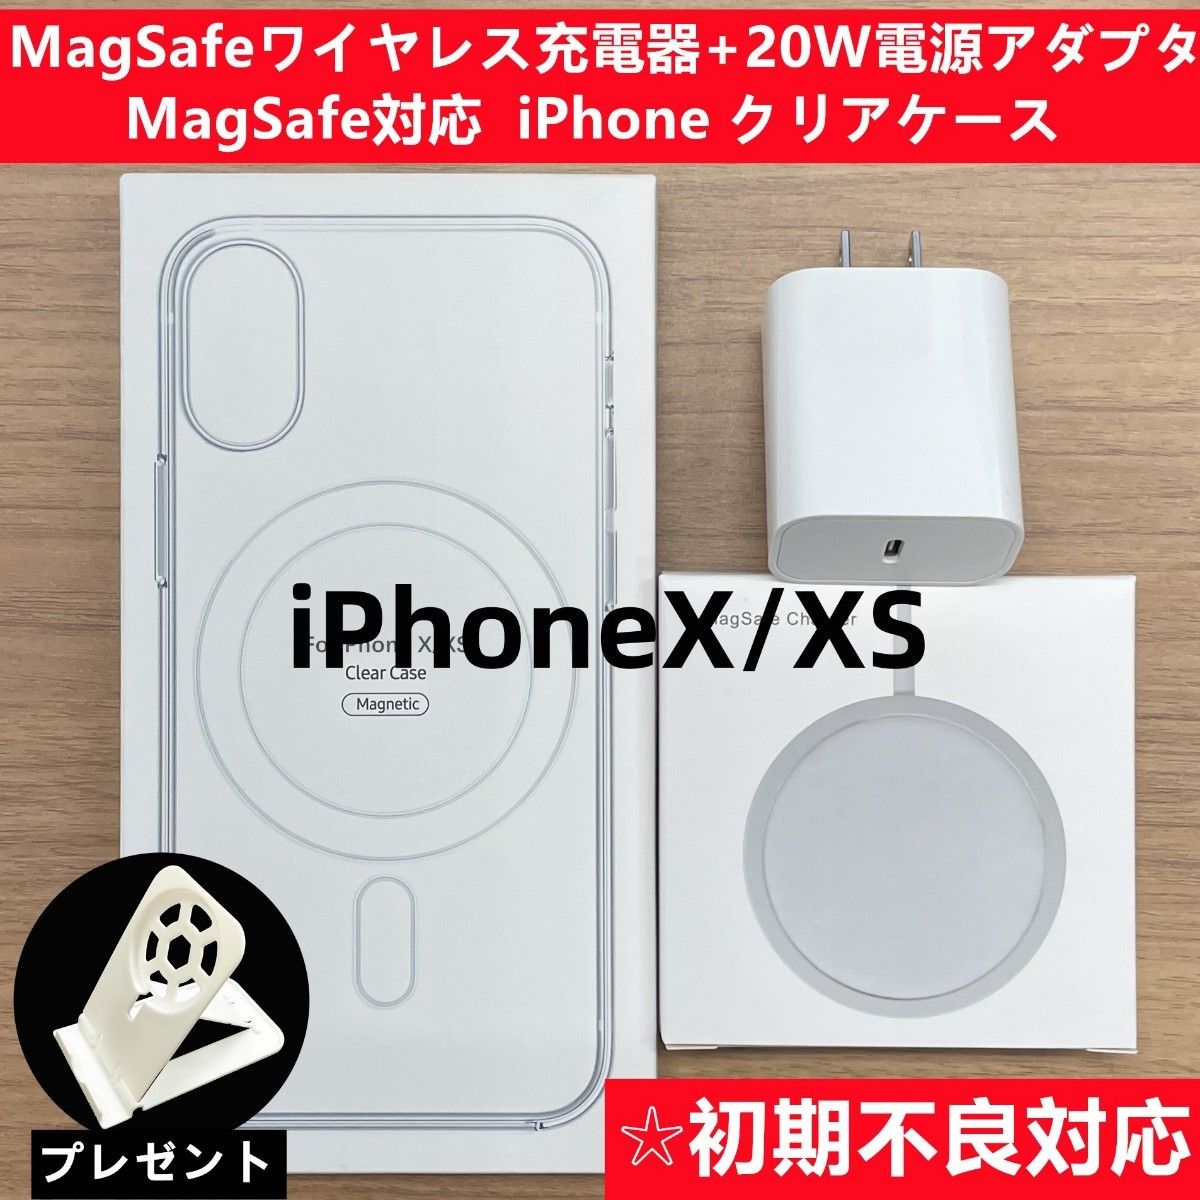 Magsafe充電器+電源アダプタ+ iPhoneX/XSクリアケースX